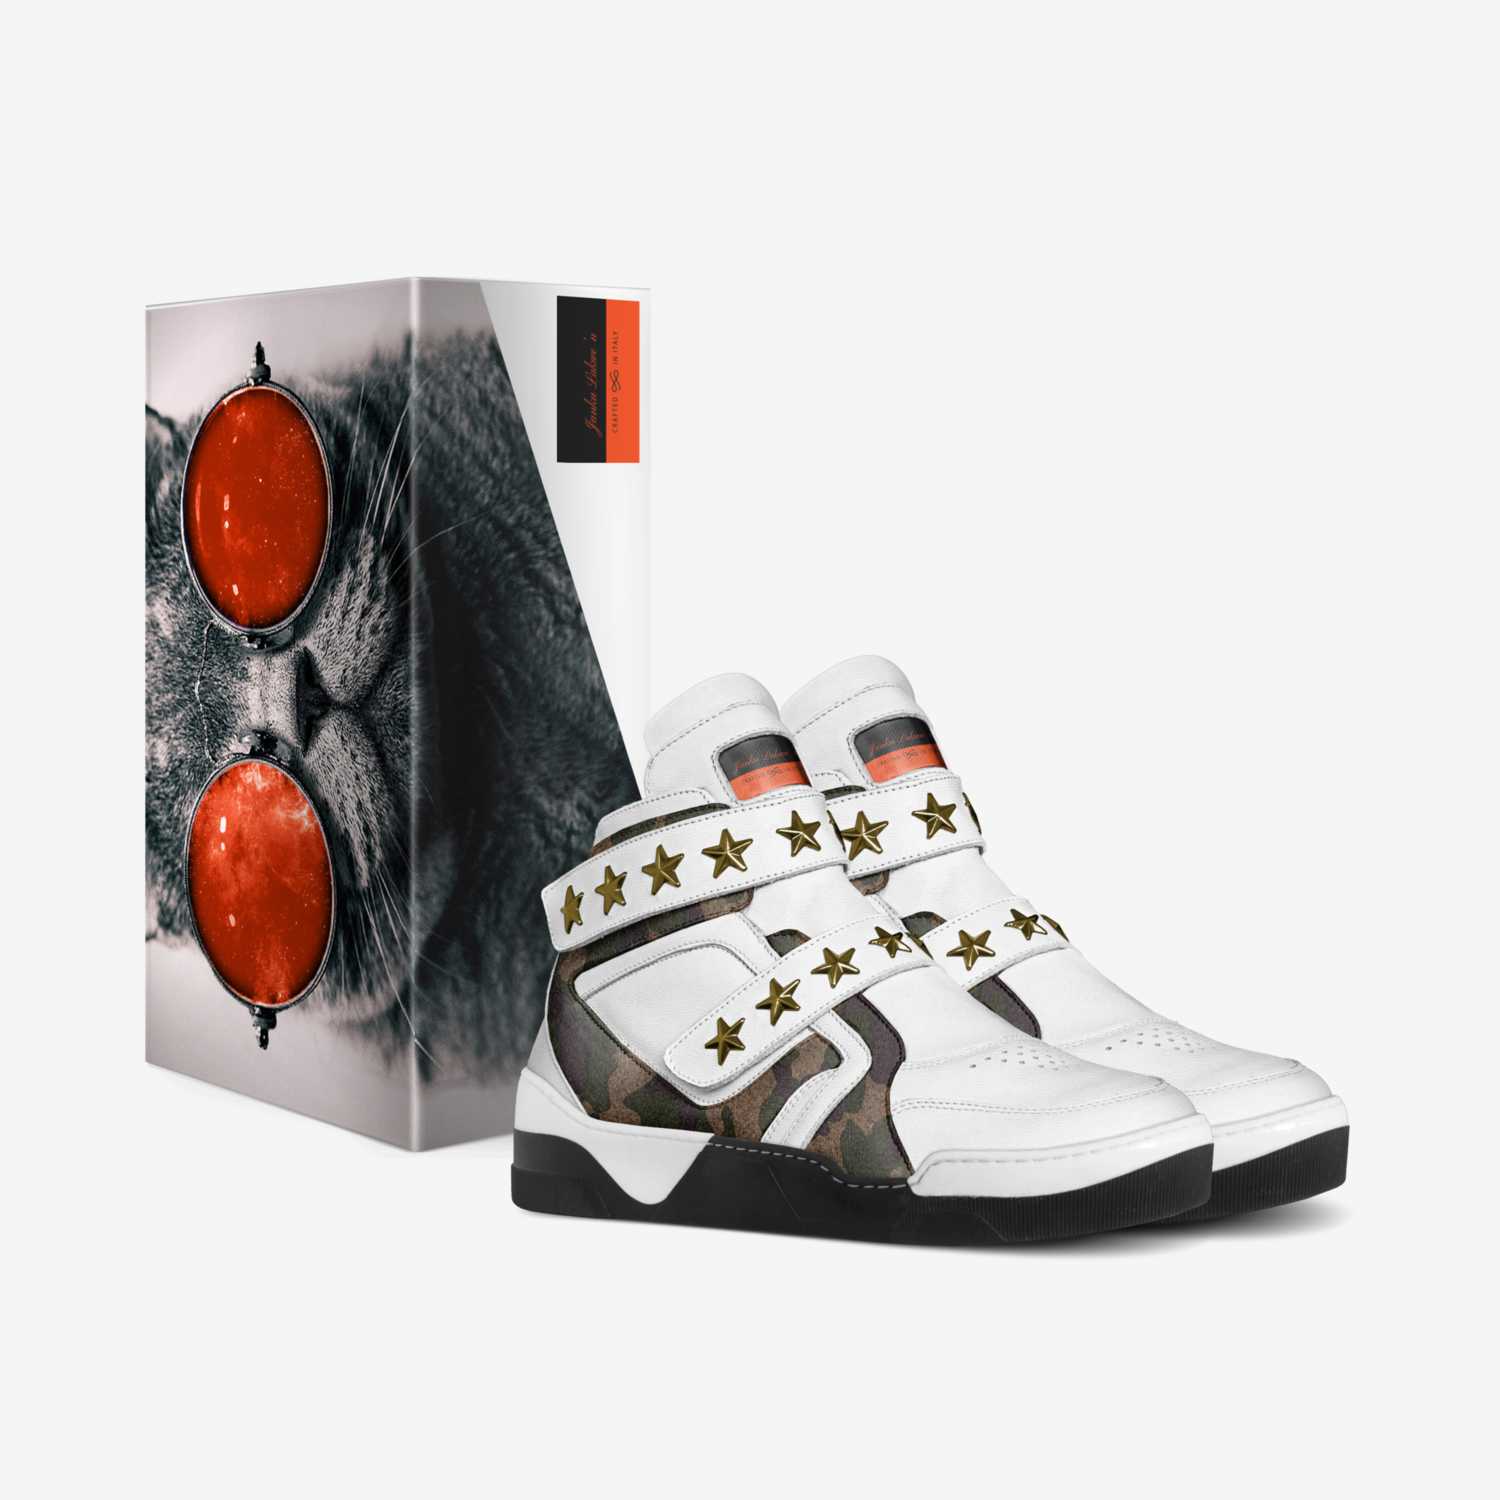 Janku Lakwe’n custom made in Italy shoes by Olandriss Hill | Box view